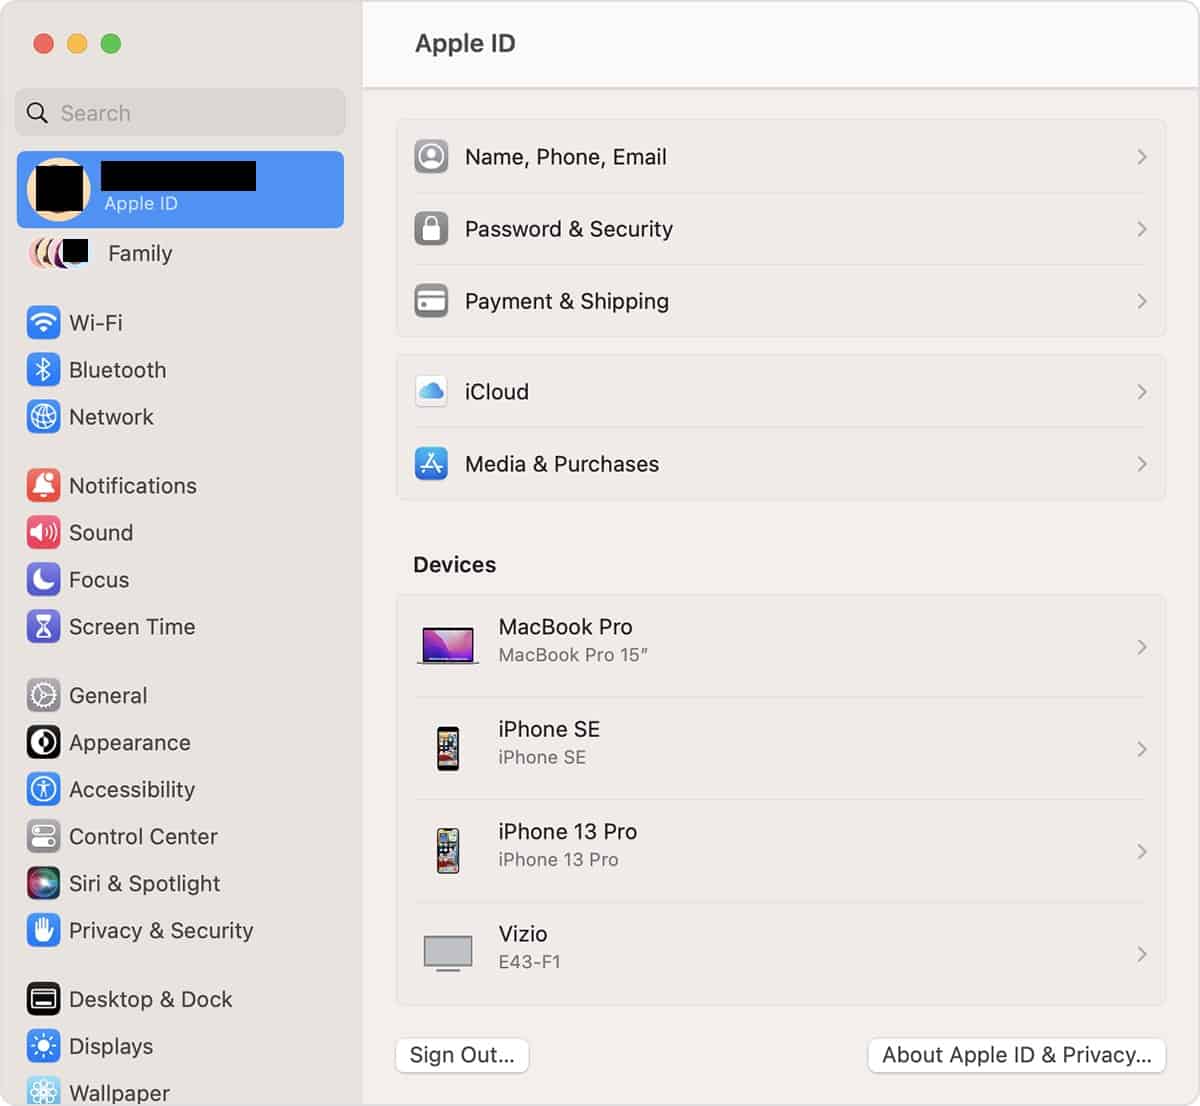 iMessage on Mac, Running apps